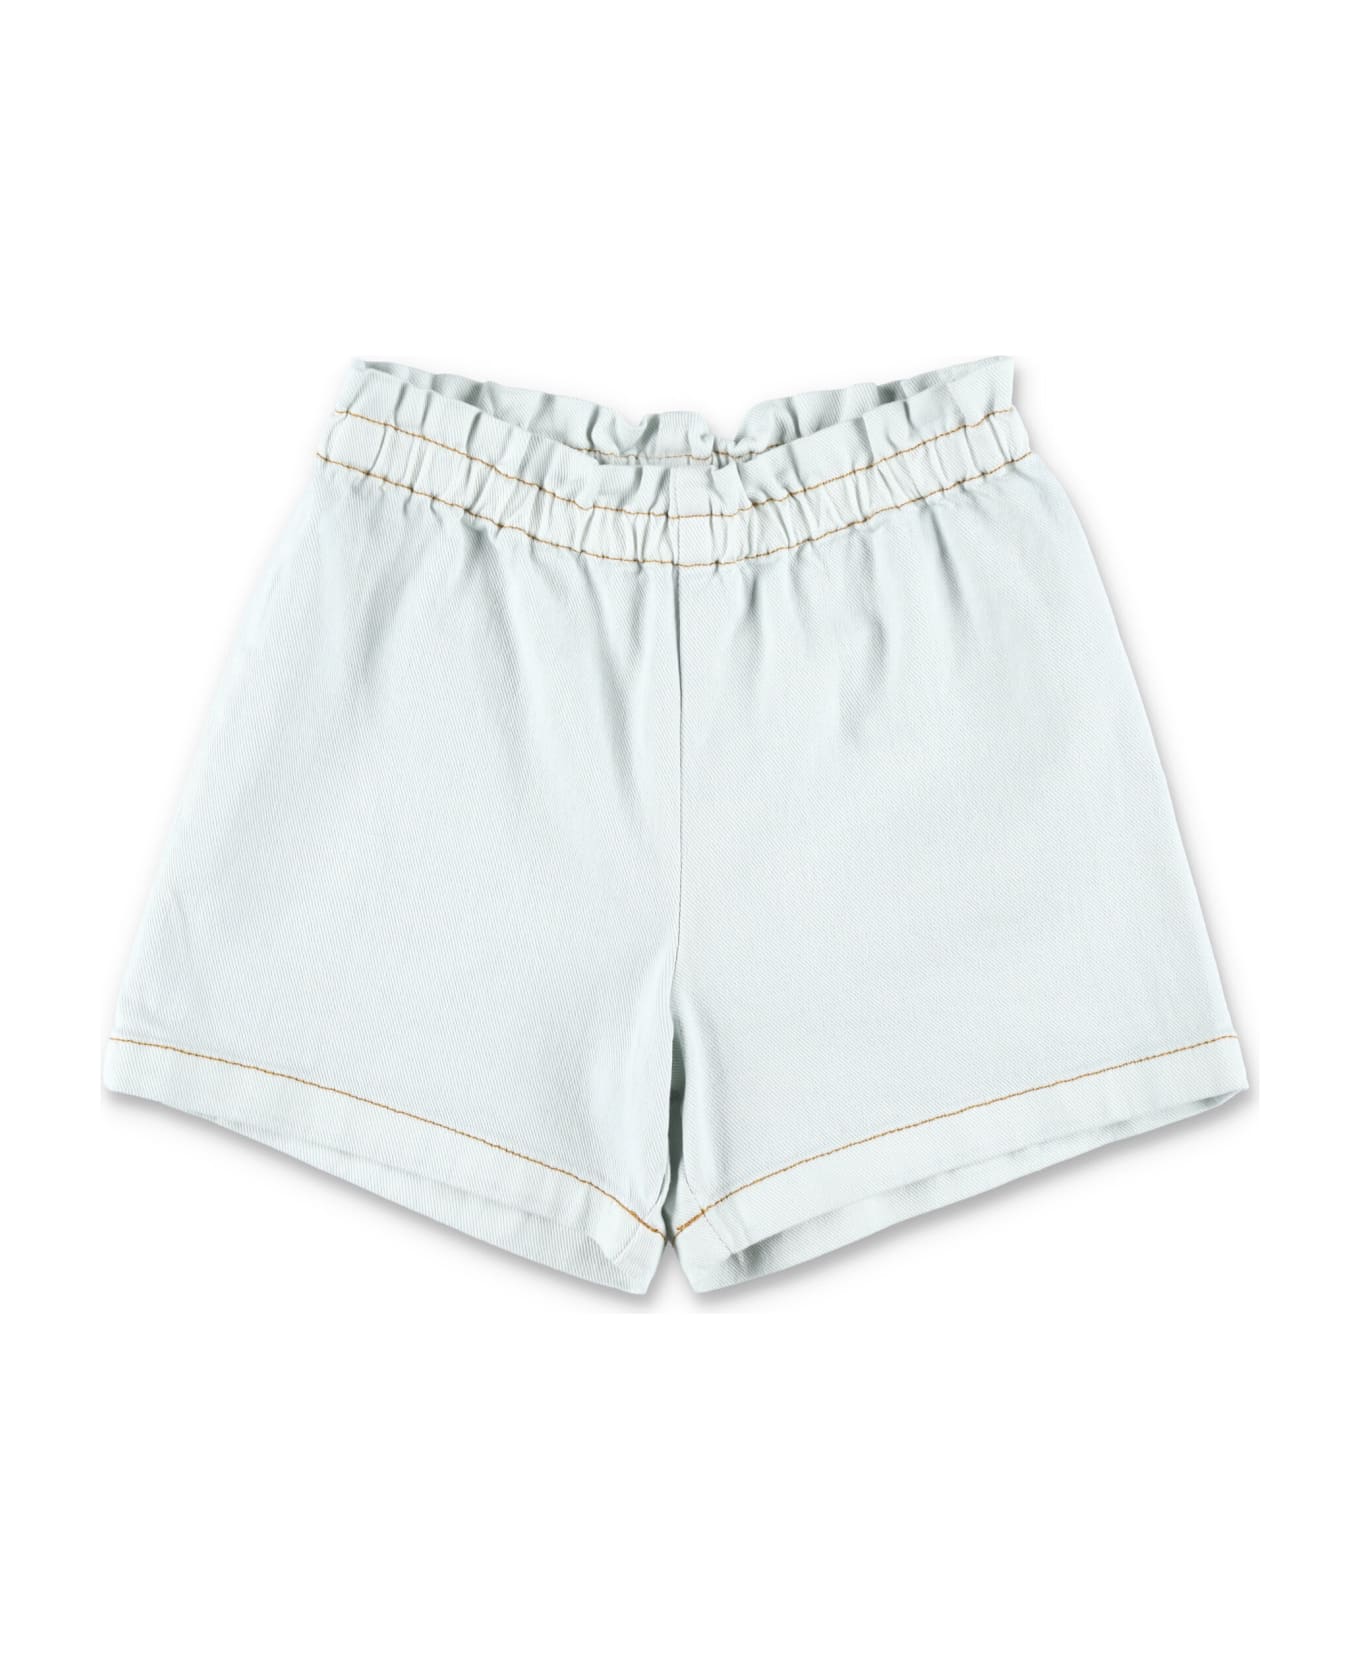 Bonpoint Milly Denim Shorts - AQUA BLEU